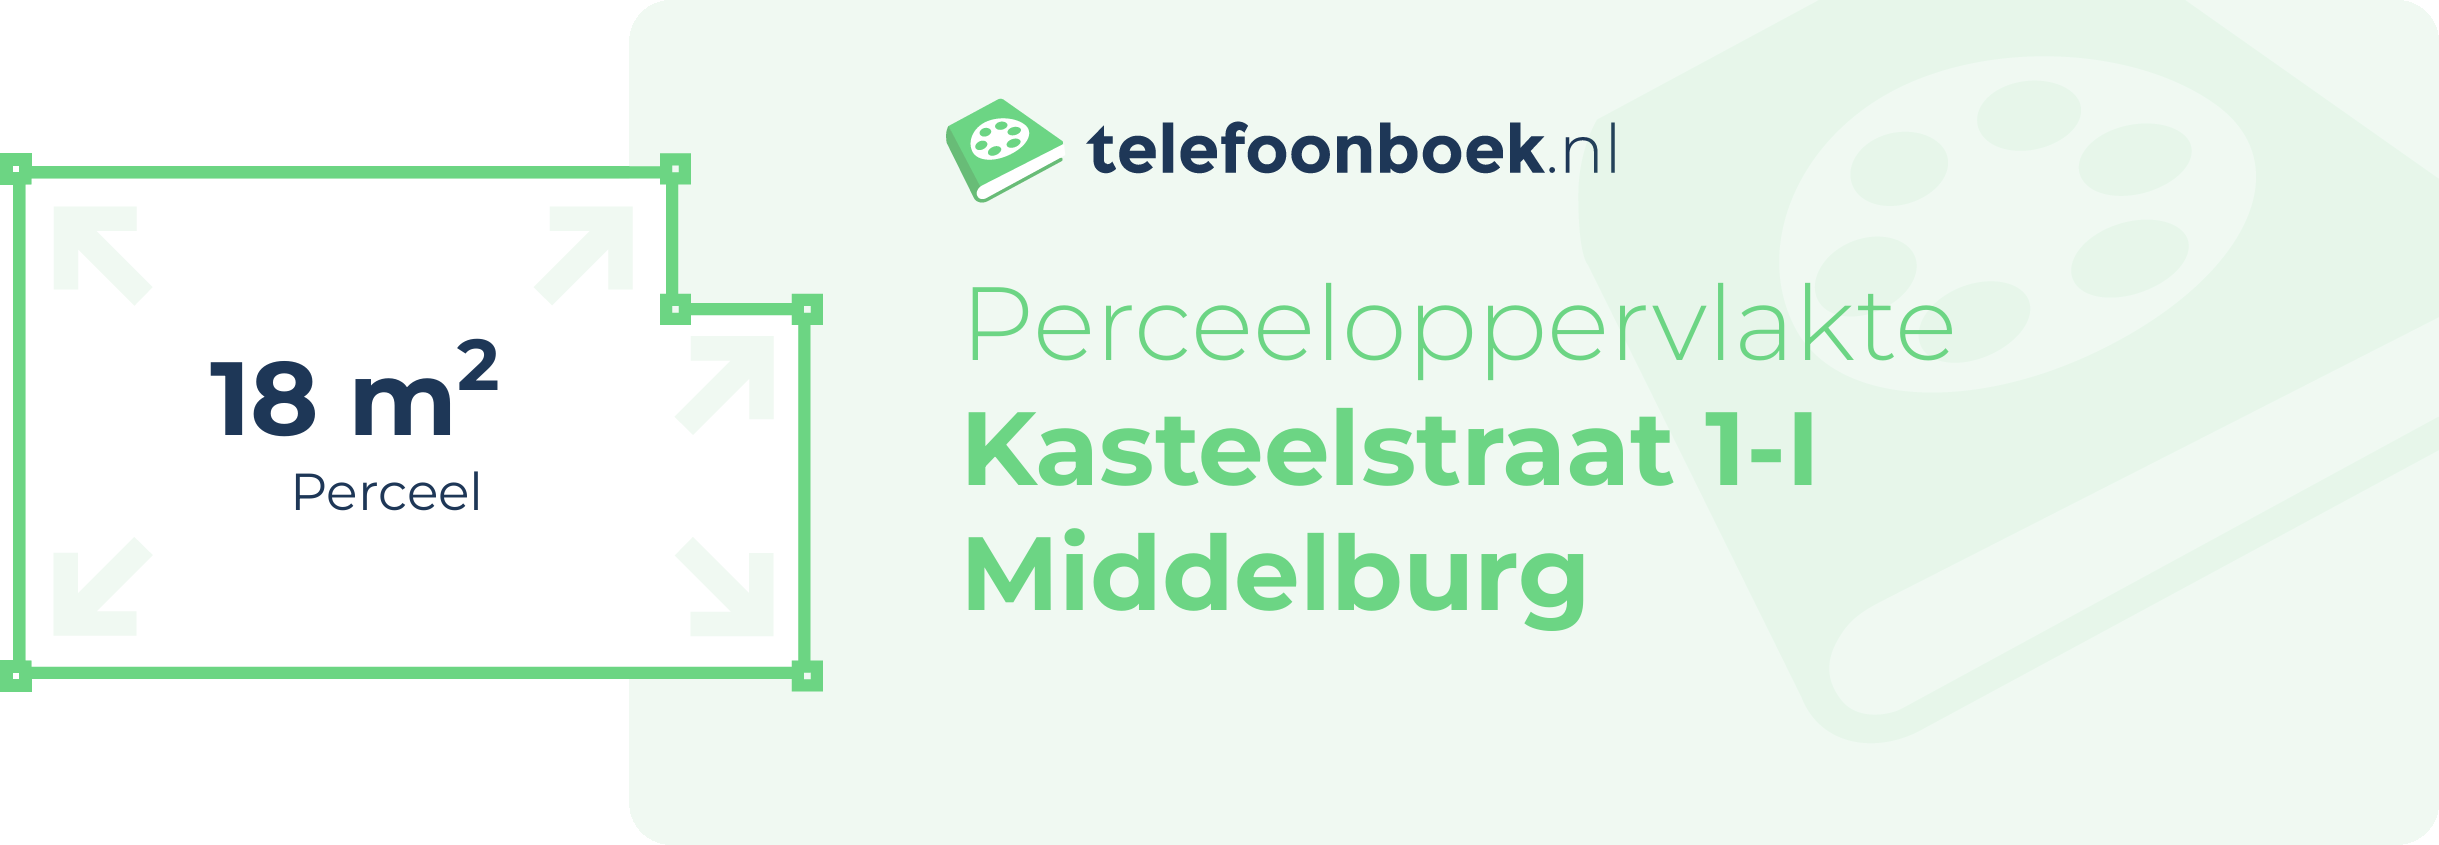 Perceeloppervlakte Kasteelstraat 1-I Middelburg